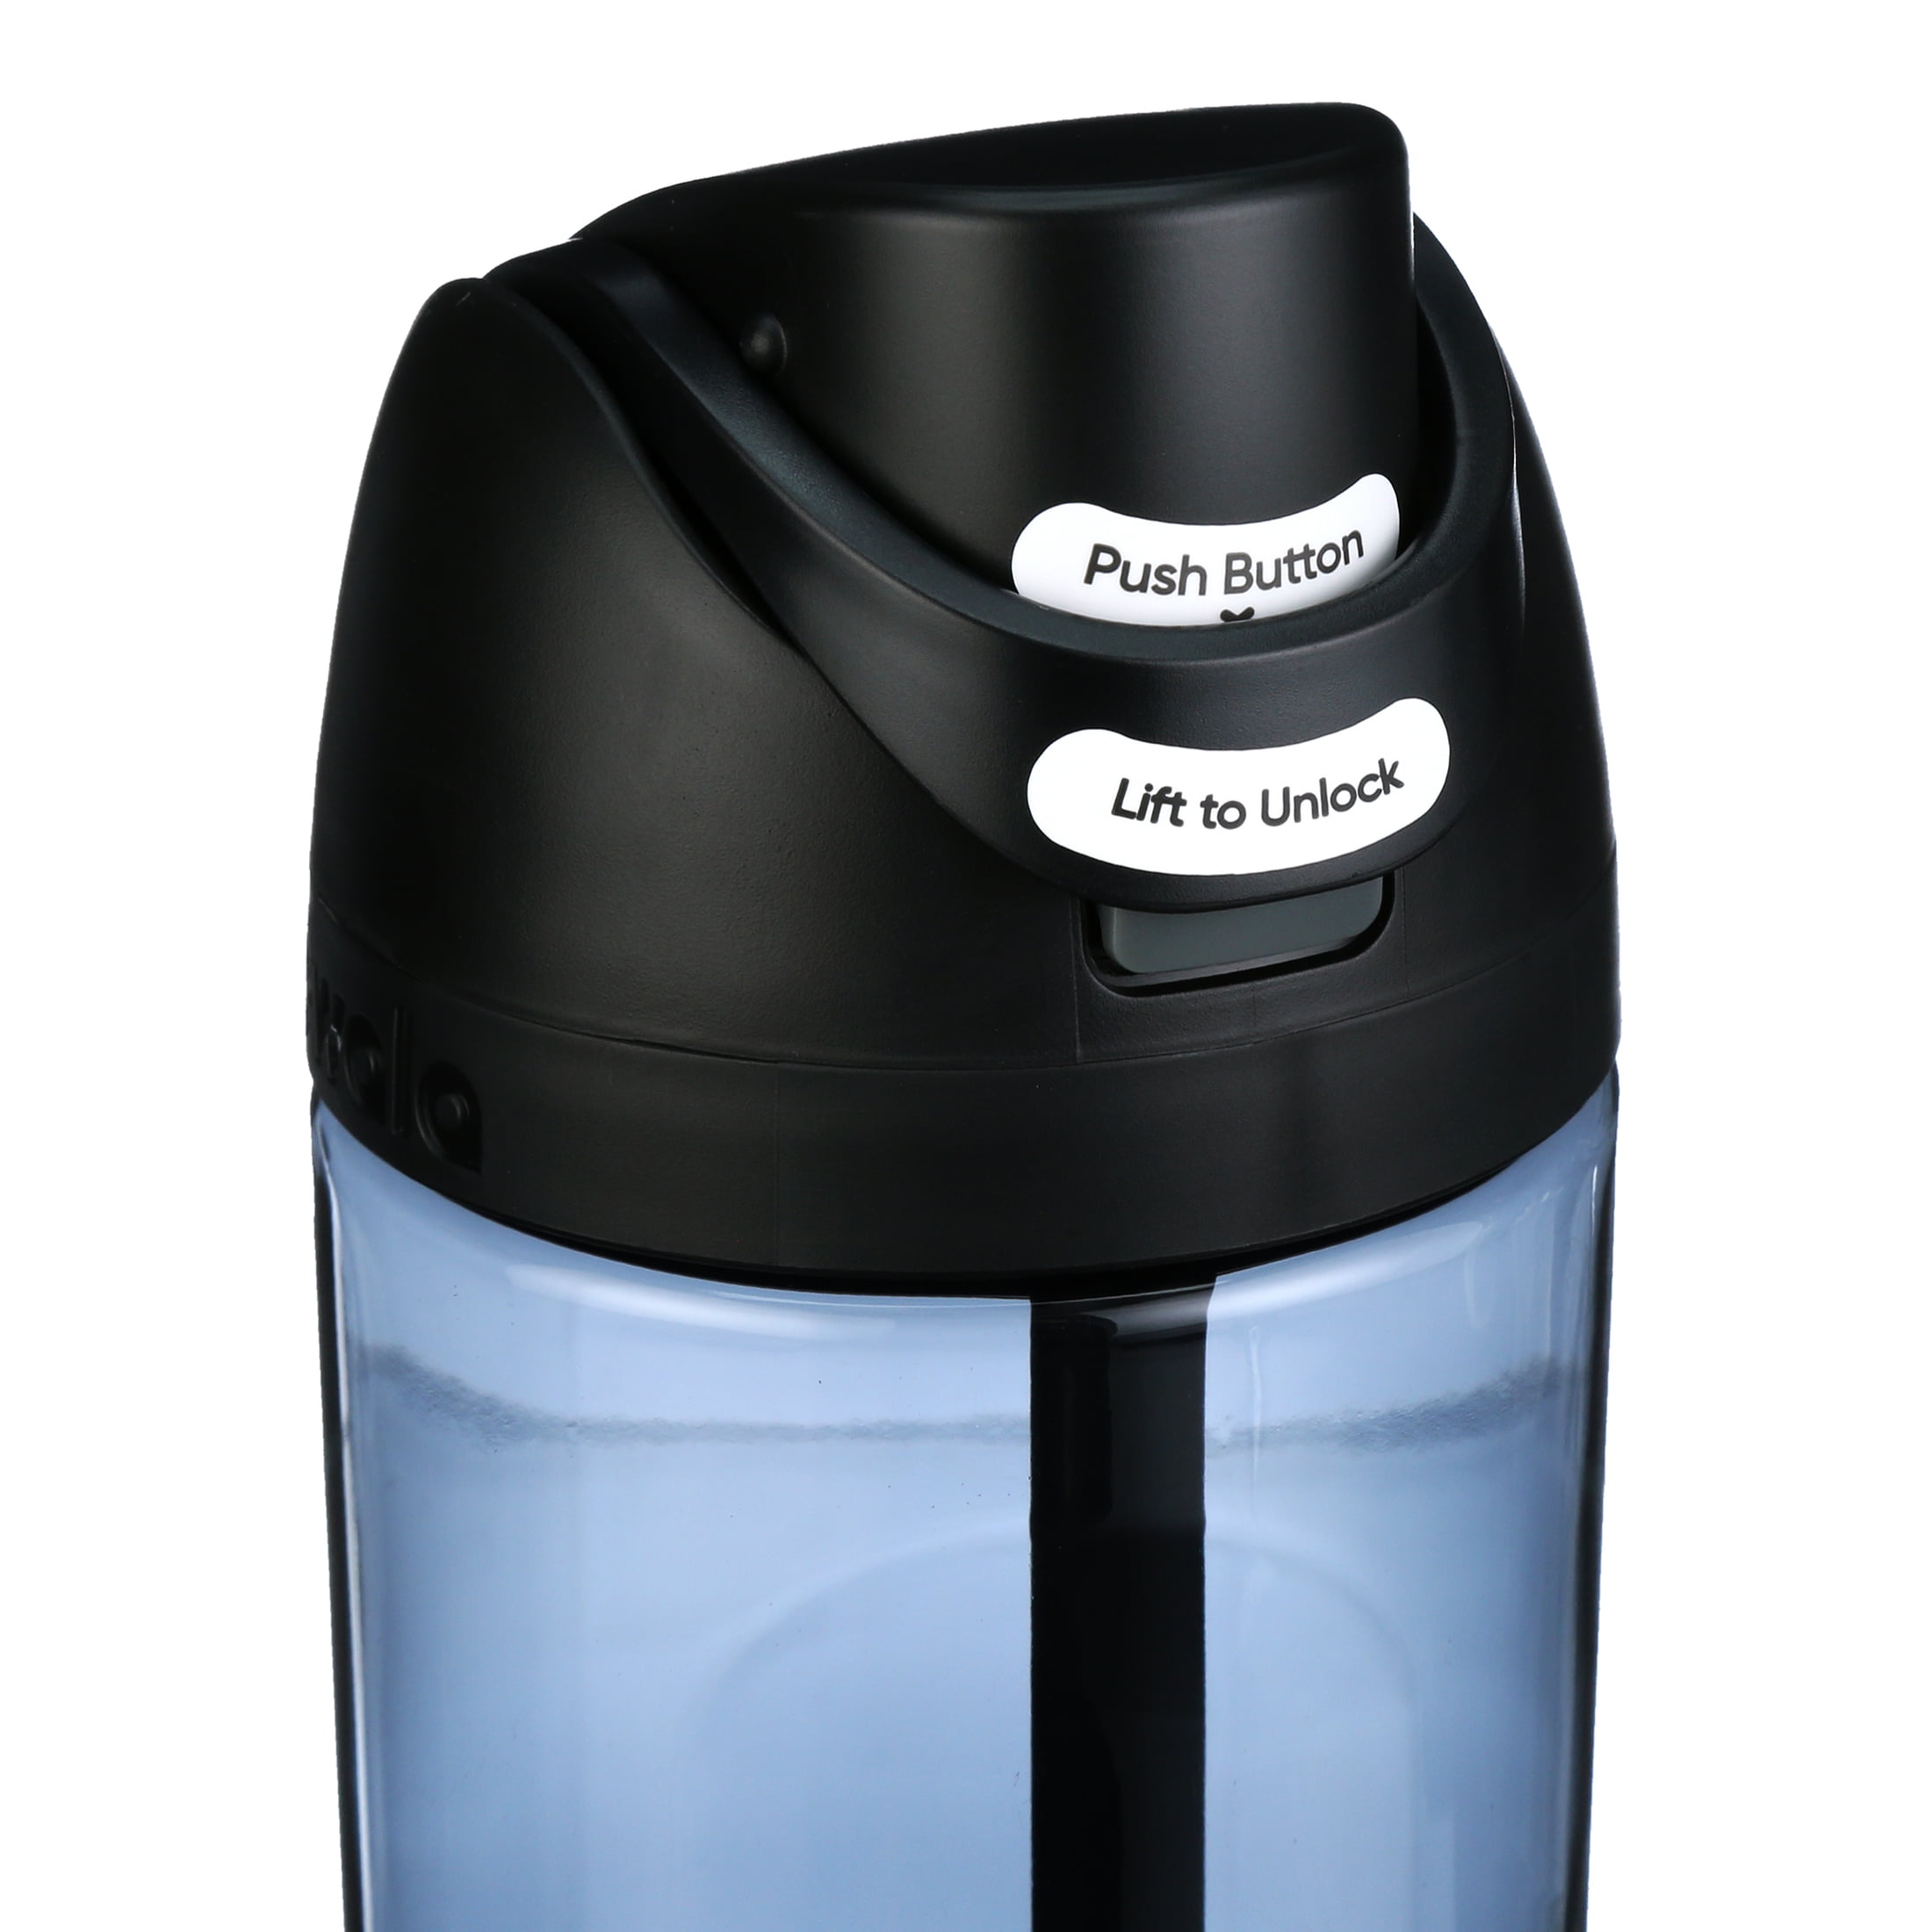 Owala FreeSip Tritan Water Bottle, 25oz Purple - Yahoo Shopping